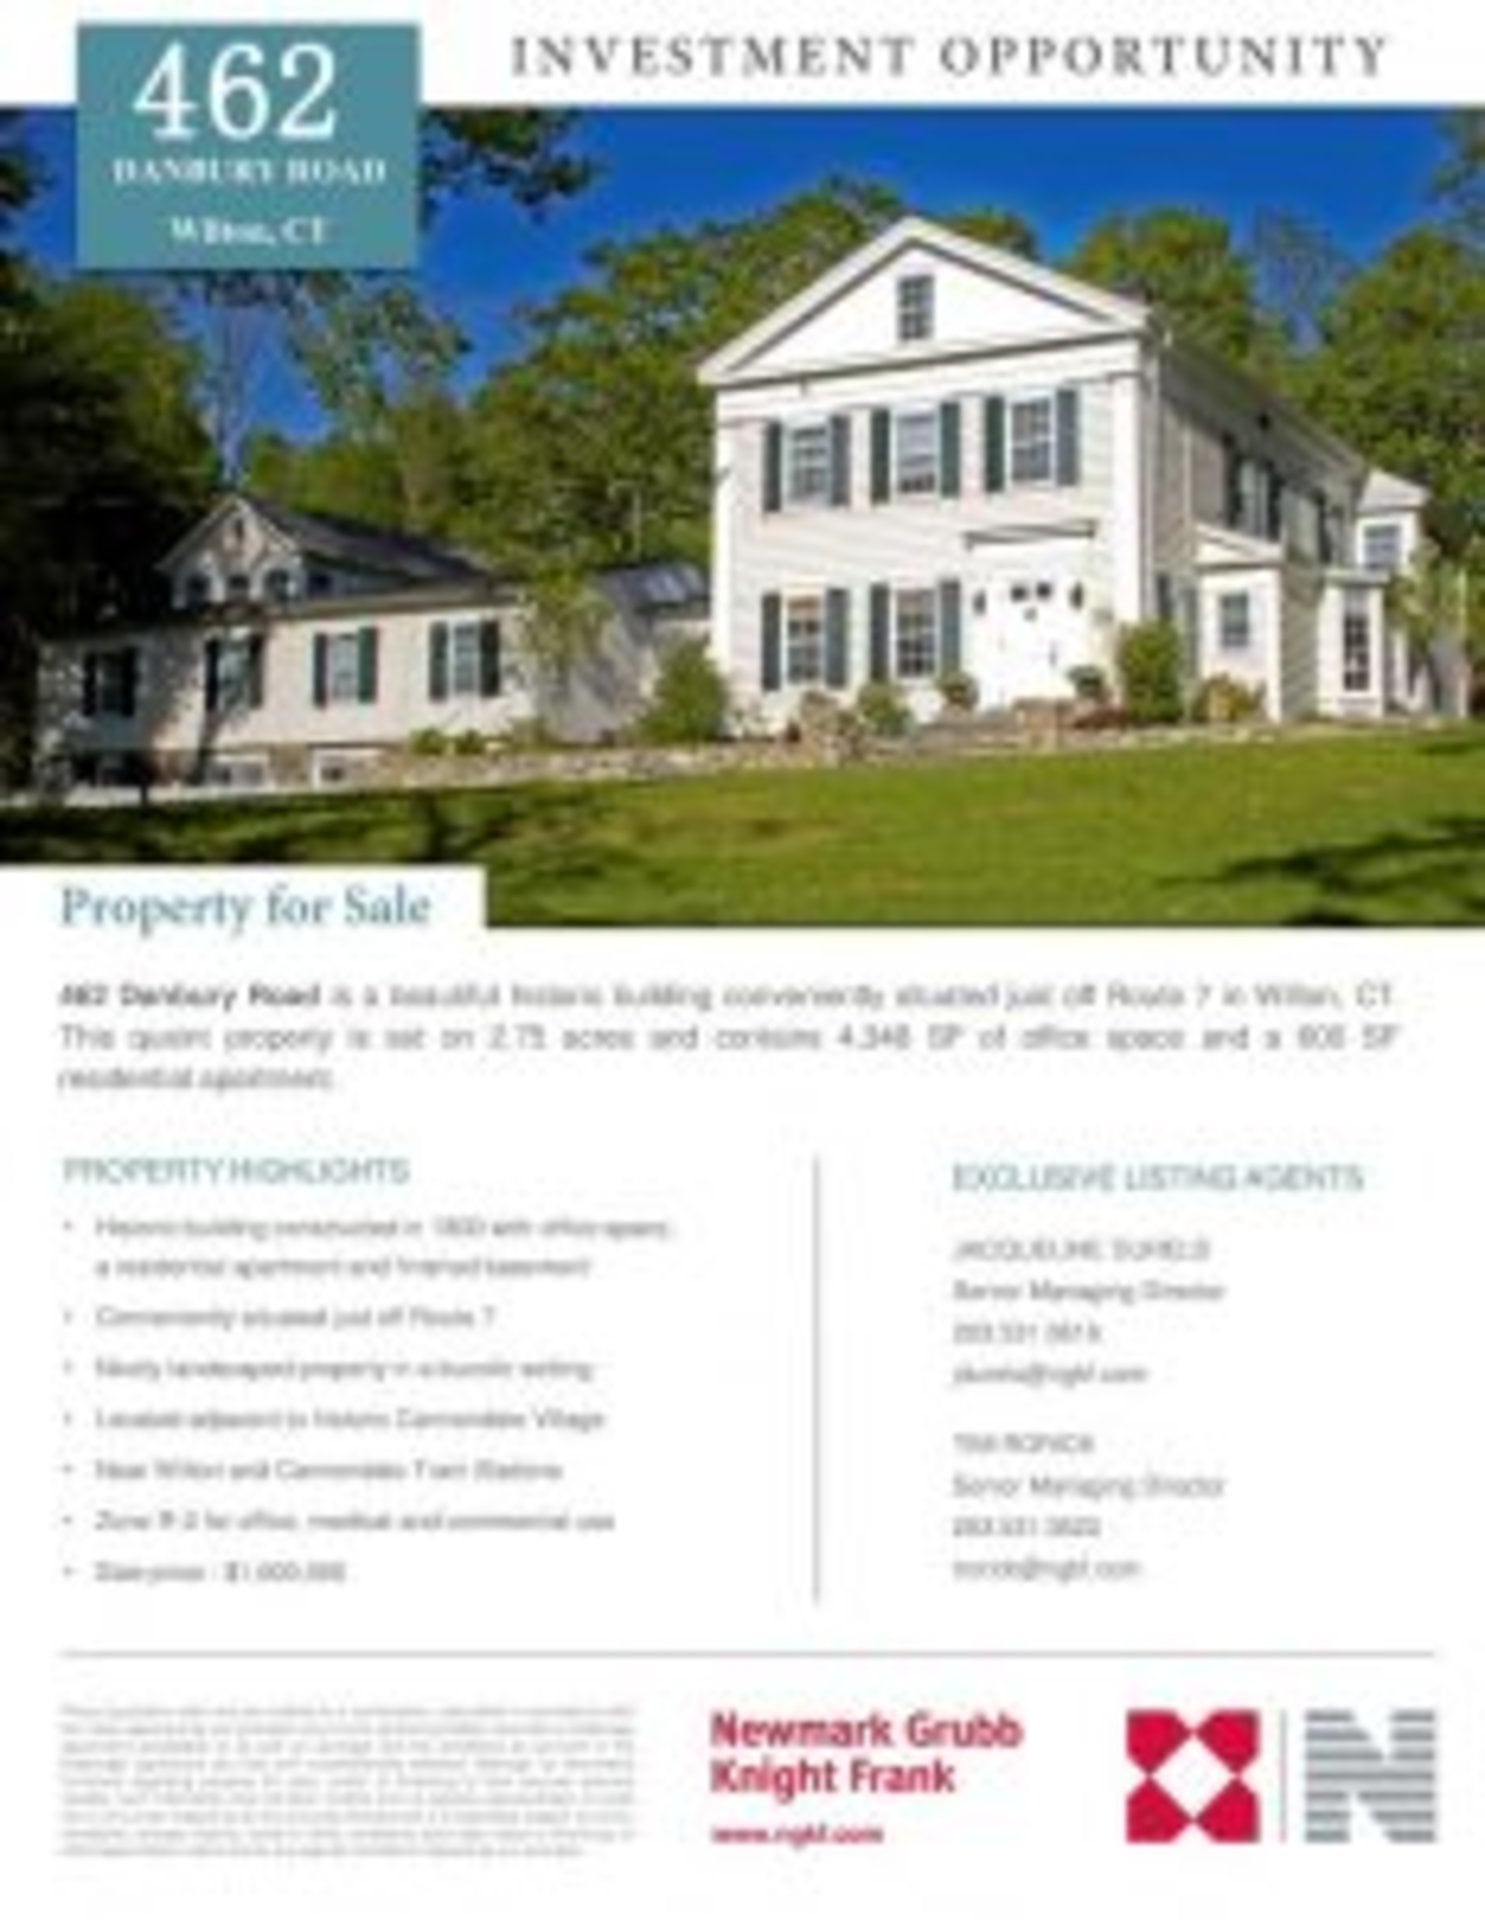 Property For Sale: 462 Danbury Road, Wilton, CT.